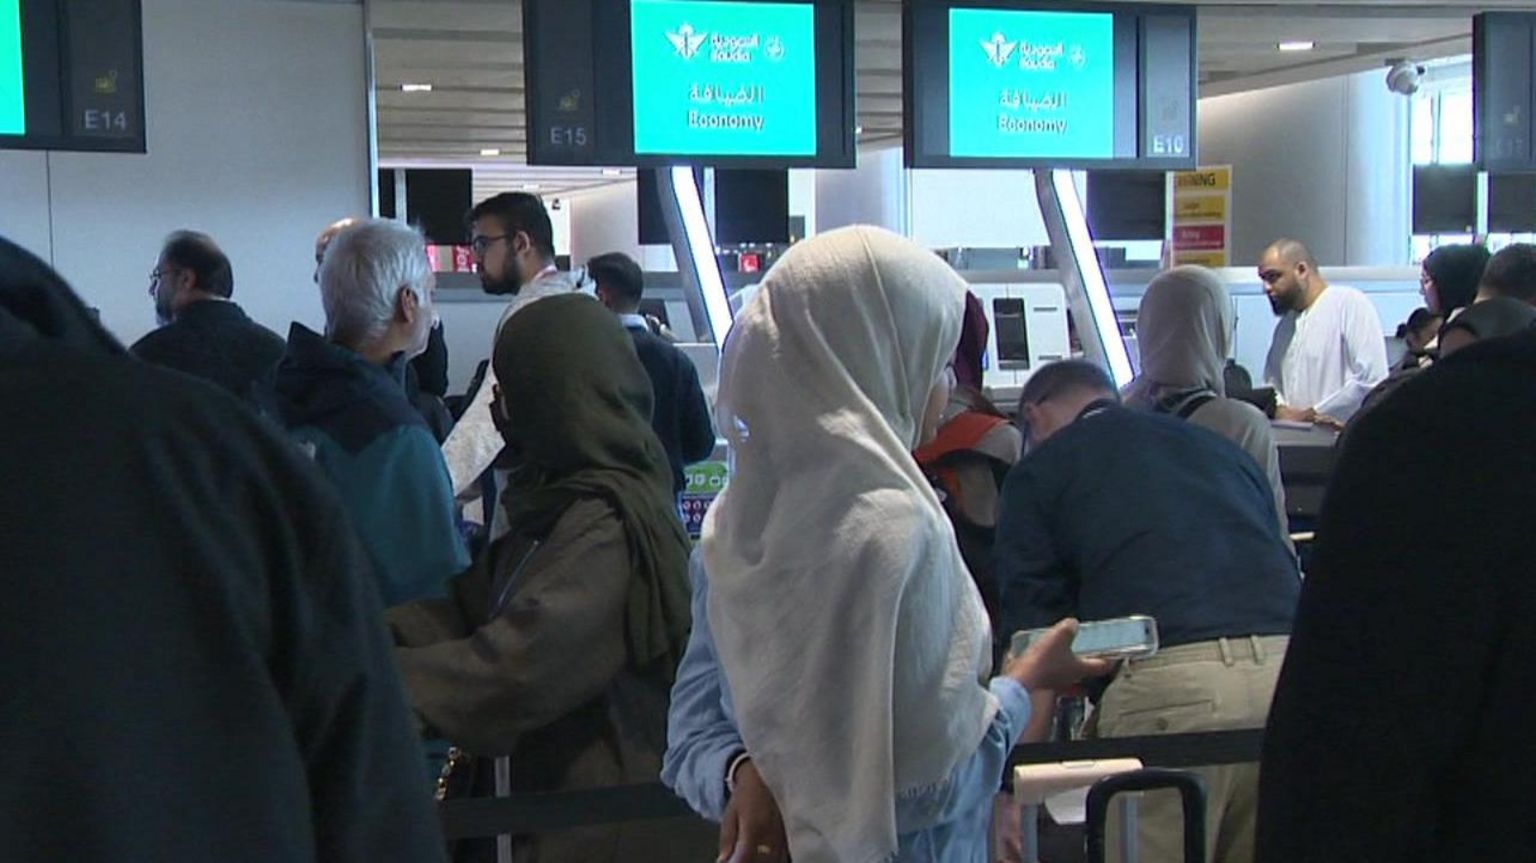 Pilgrims head through security at Manchester airport